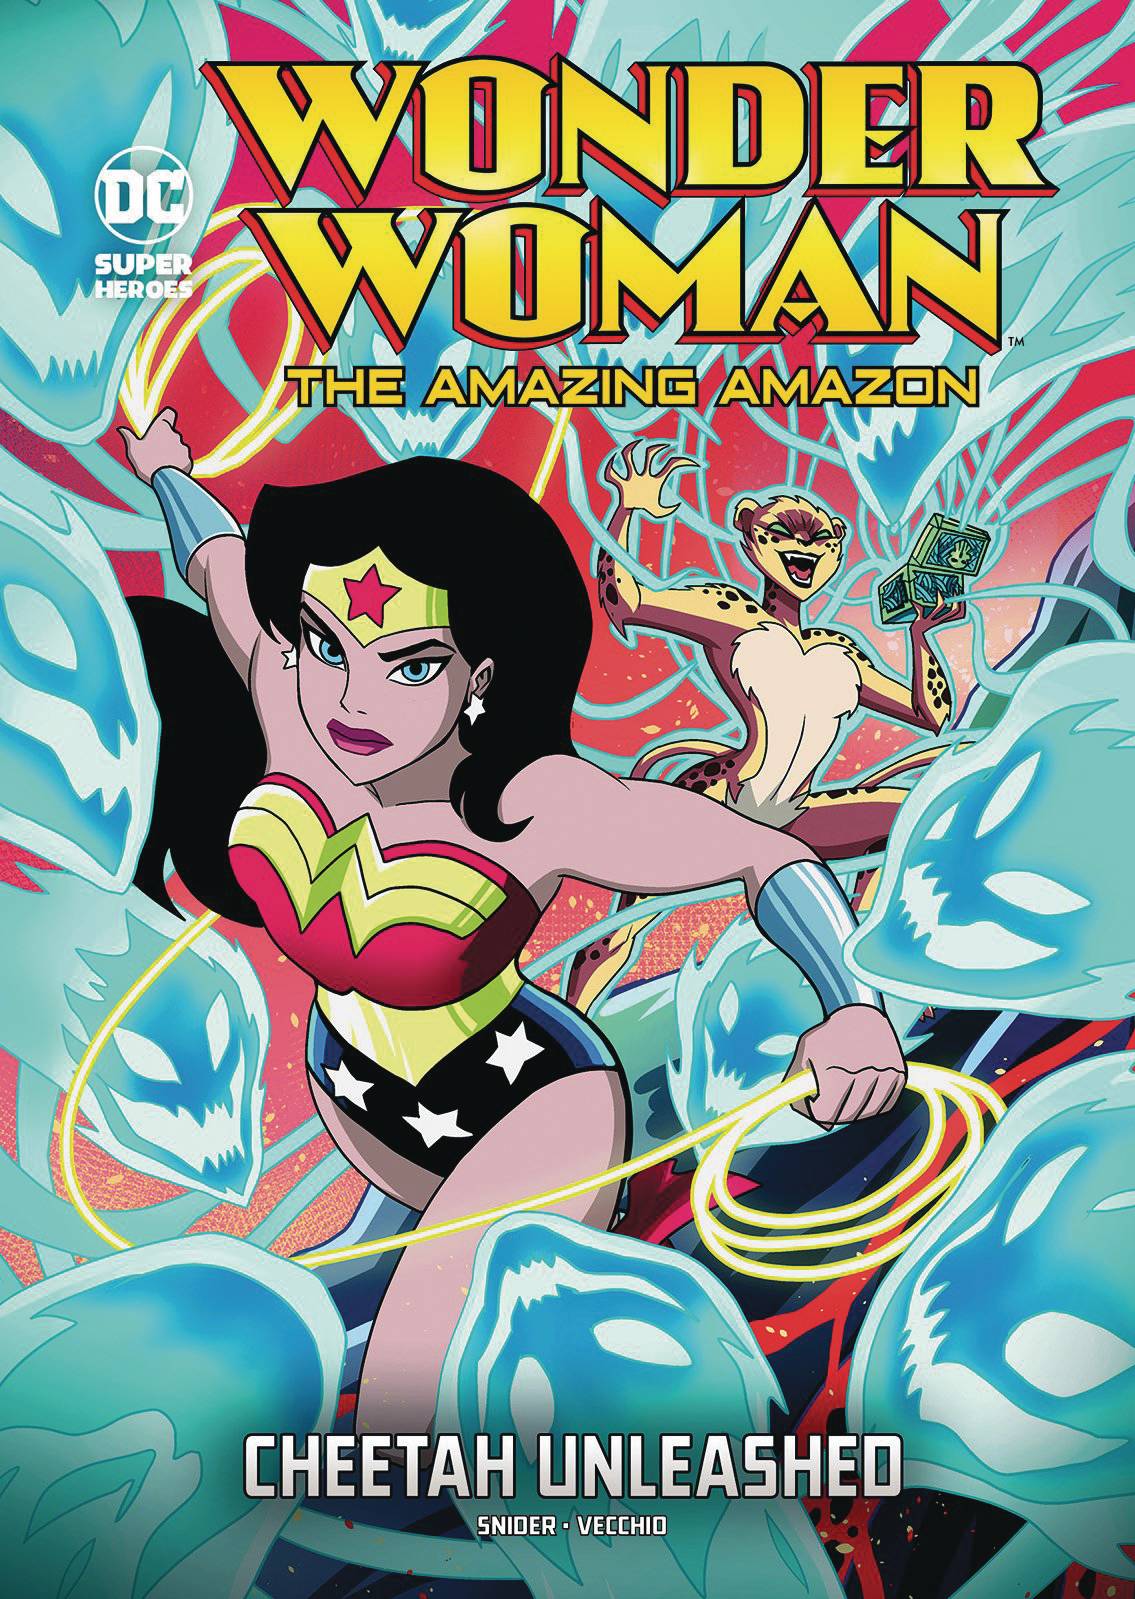 DC SUPER HEROES WONDER WOMAN: CHEETAH UNLEASHED (YR)